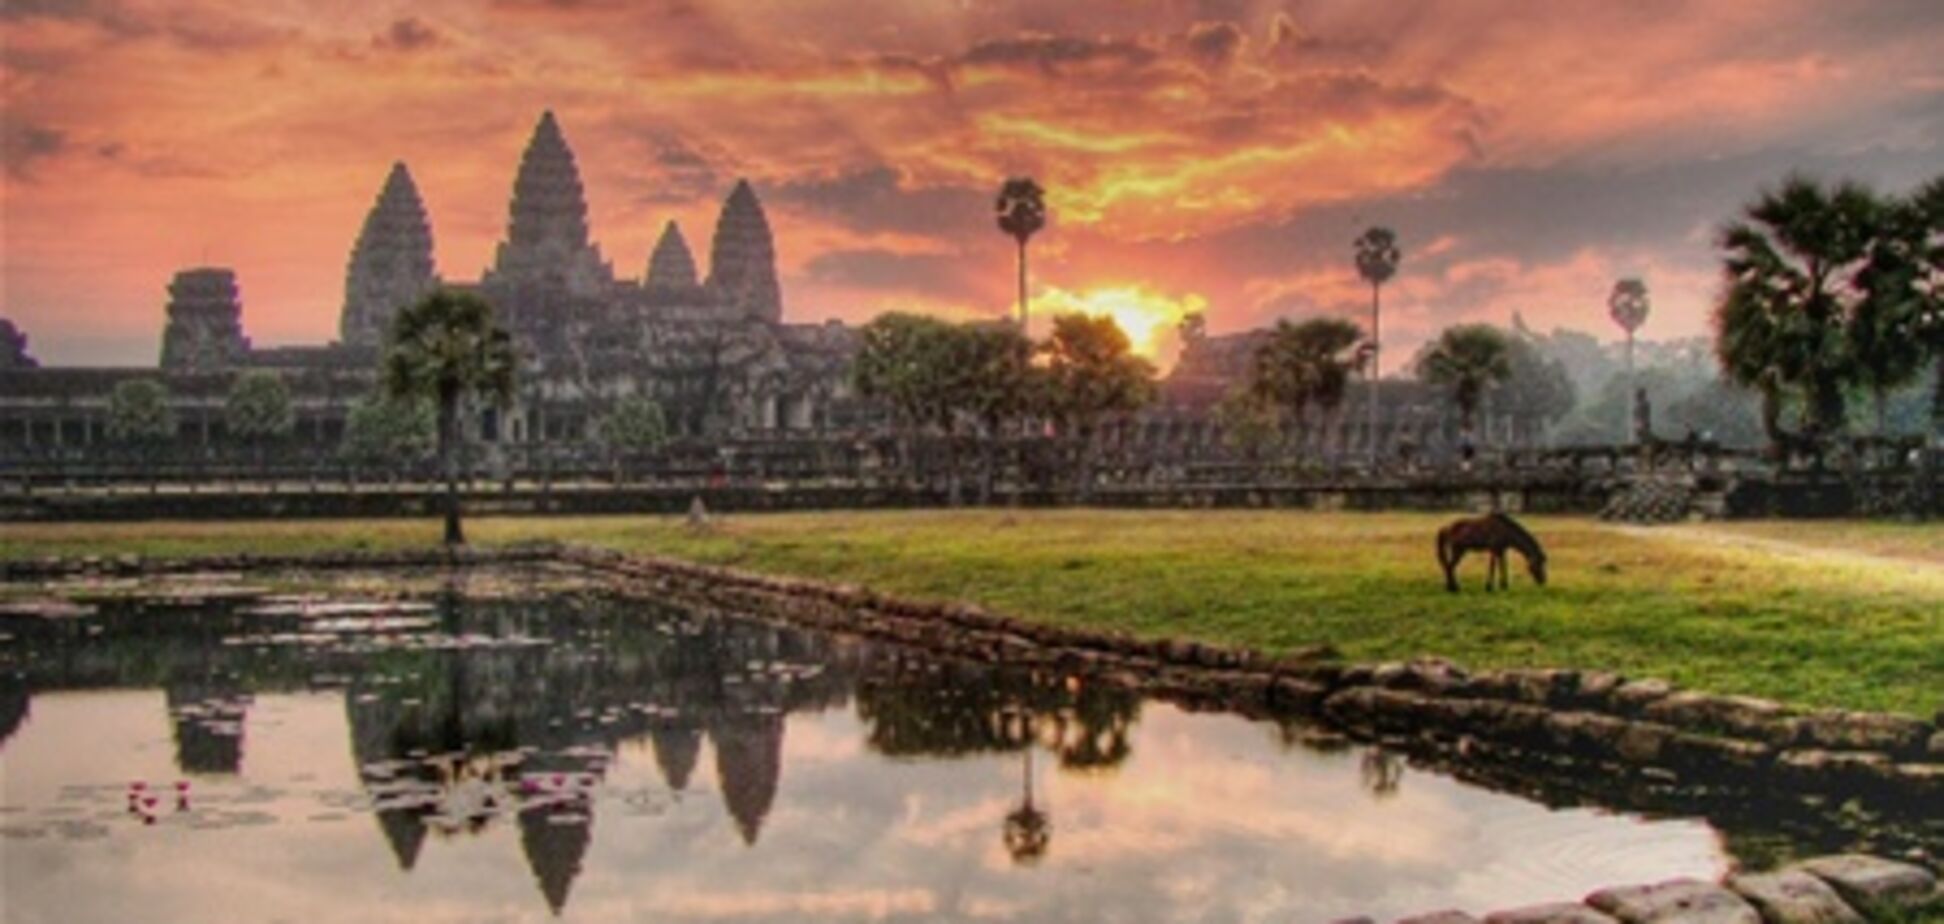 Рекордно растет интерес туристов к Камбодже